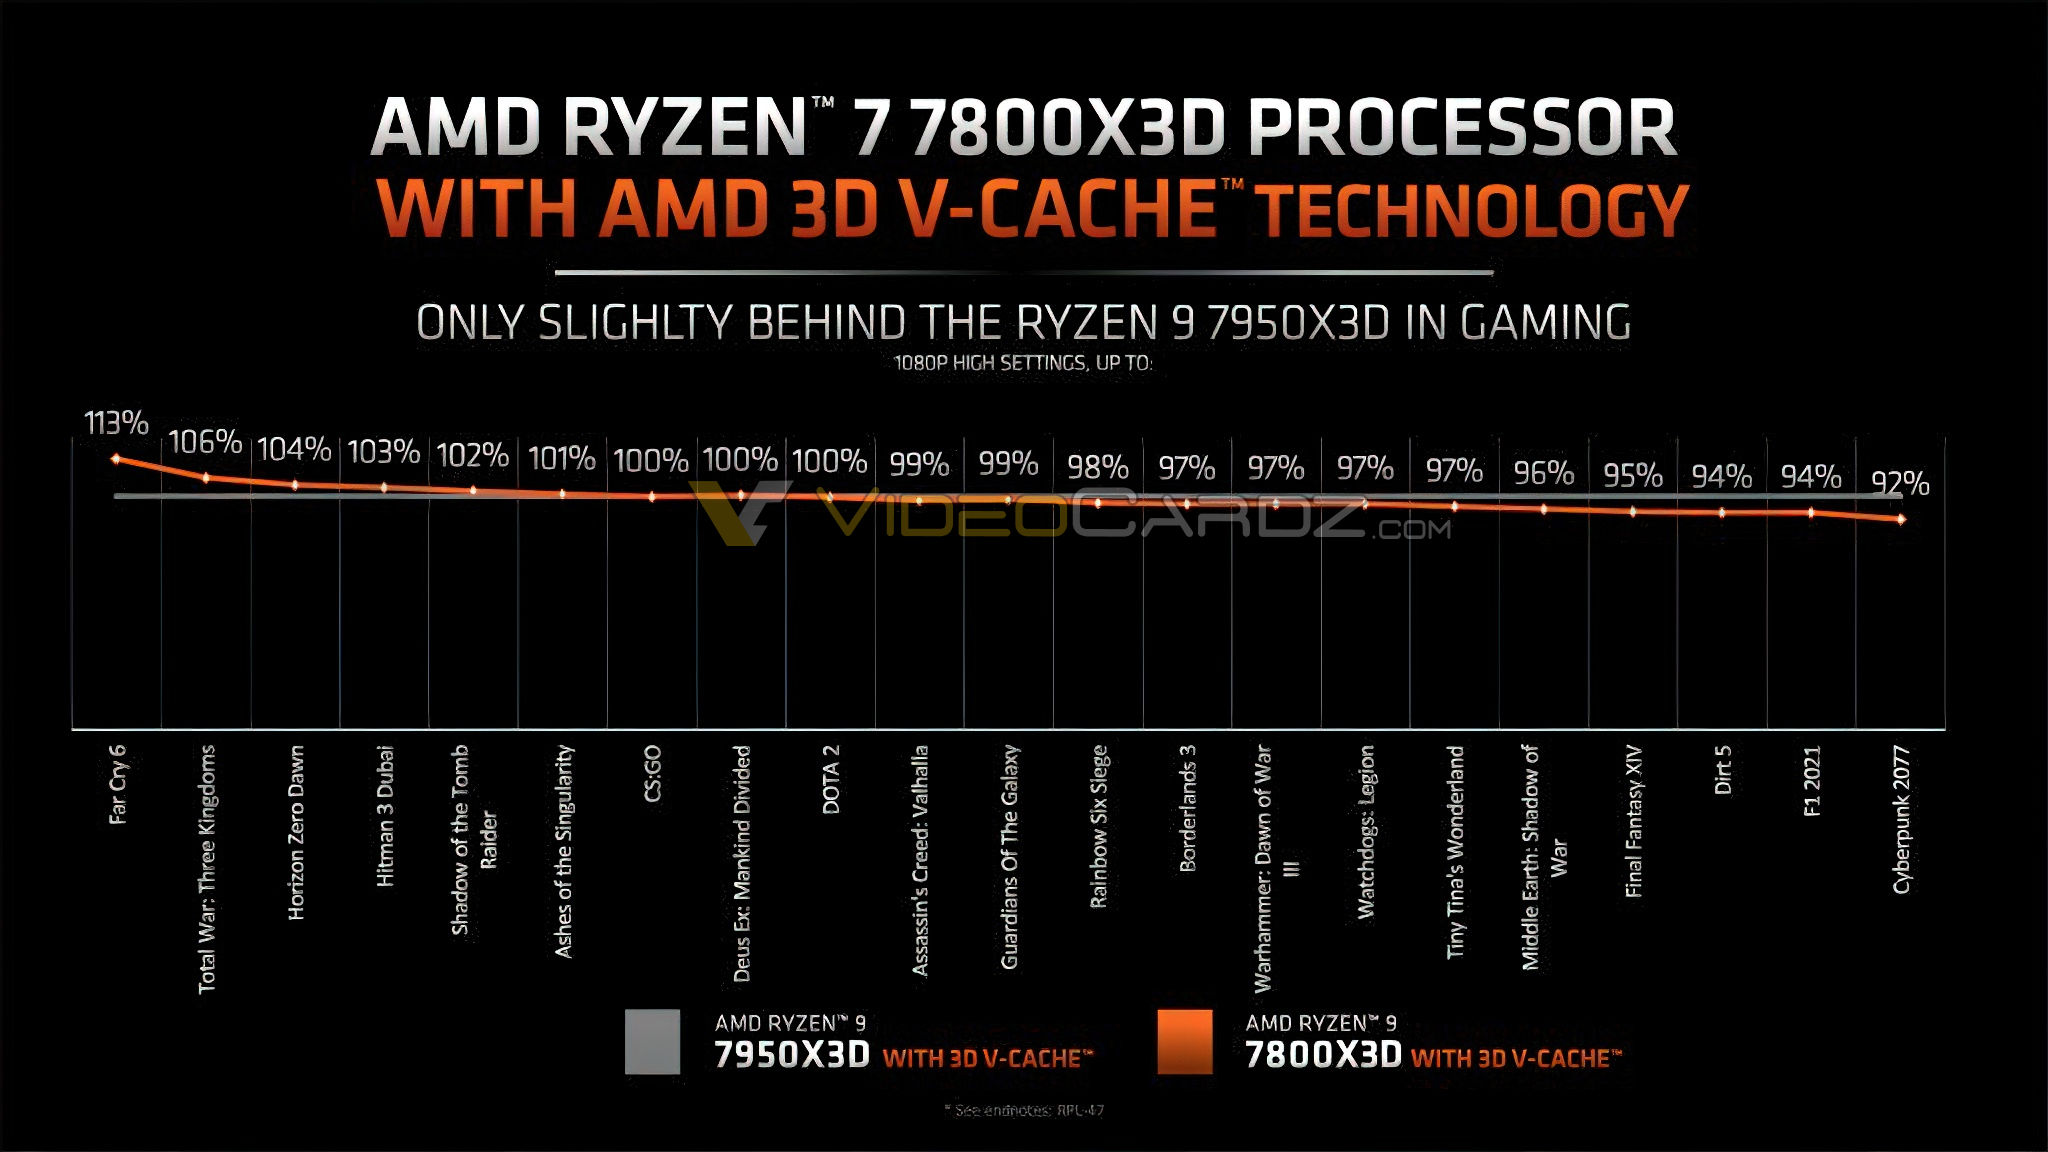 AMD Ryzen 5 PRO 4650G processeur 3,7 GHz 8 Mo L3